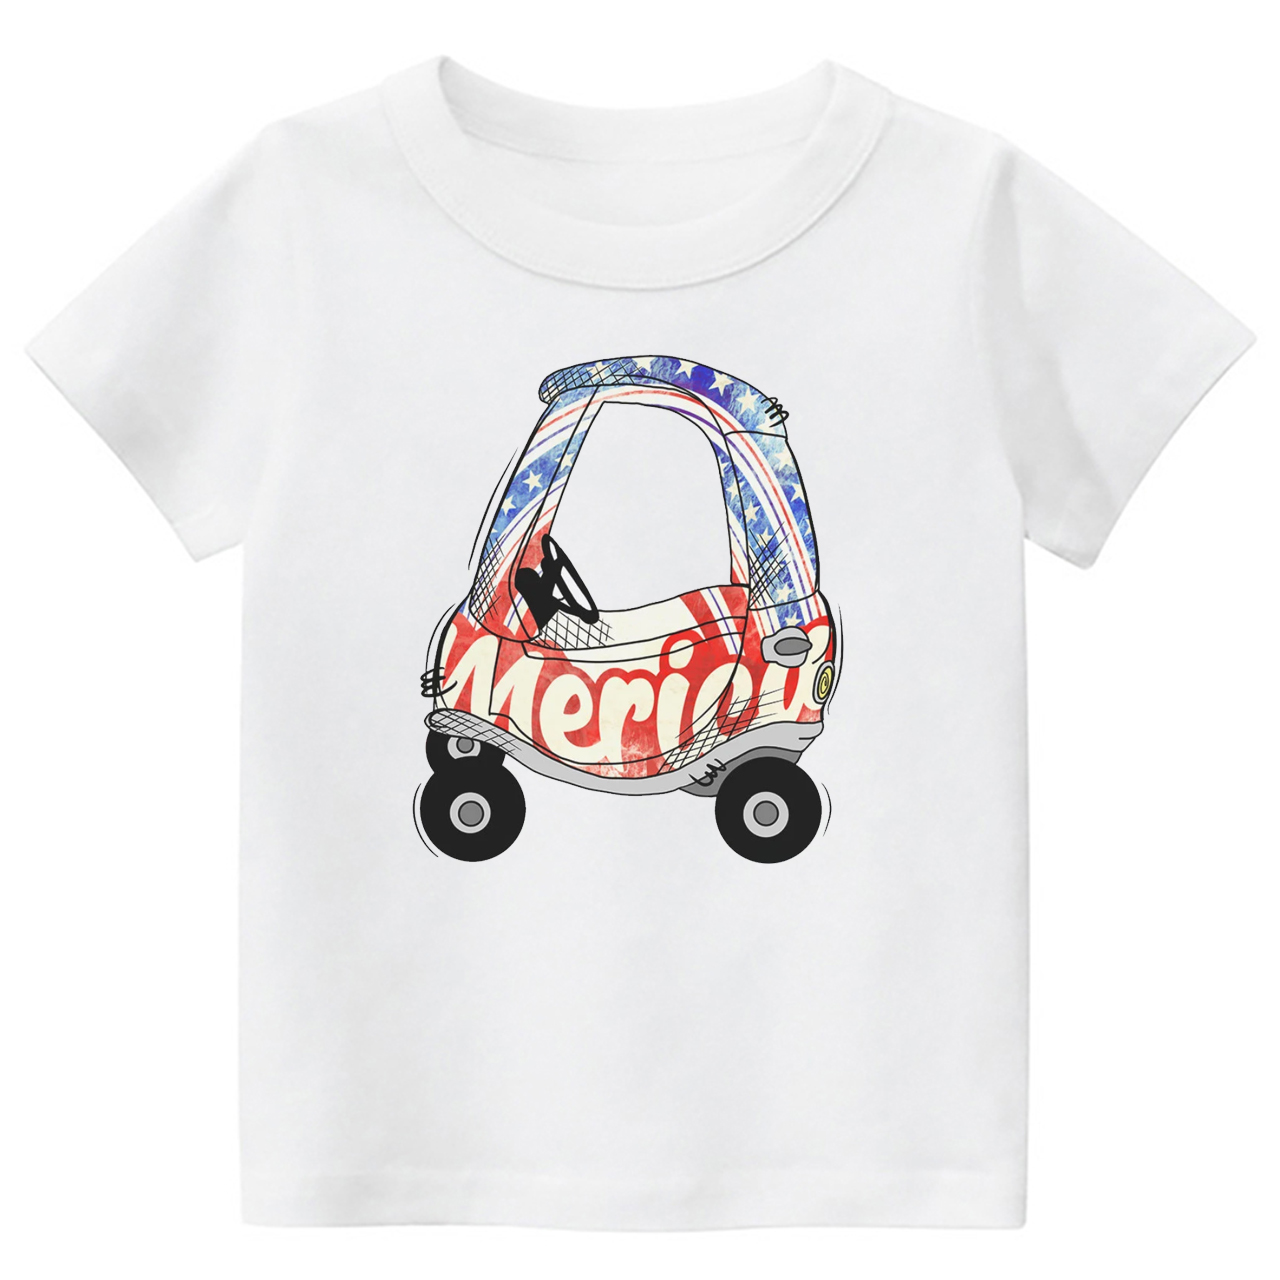 Merica Buggy Toddler Shirt